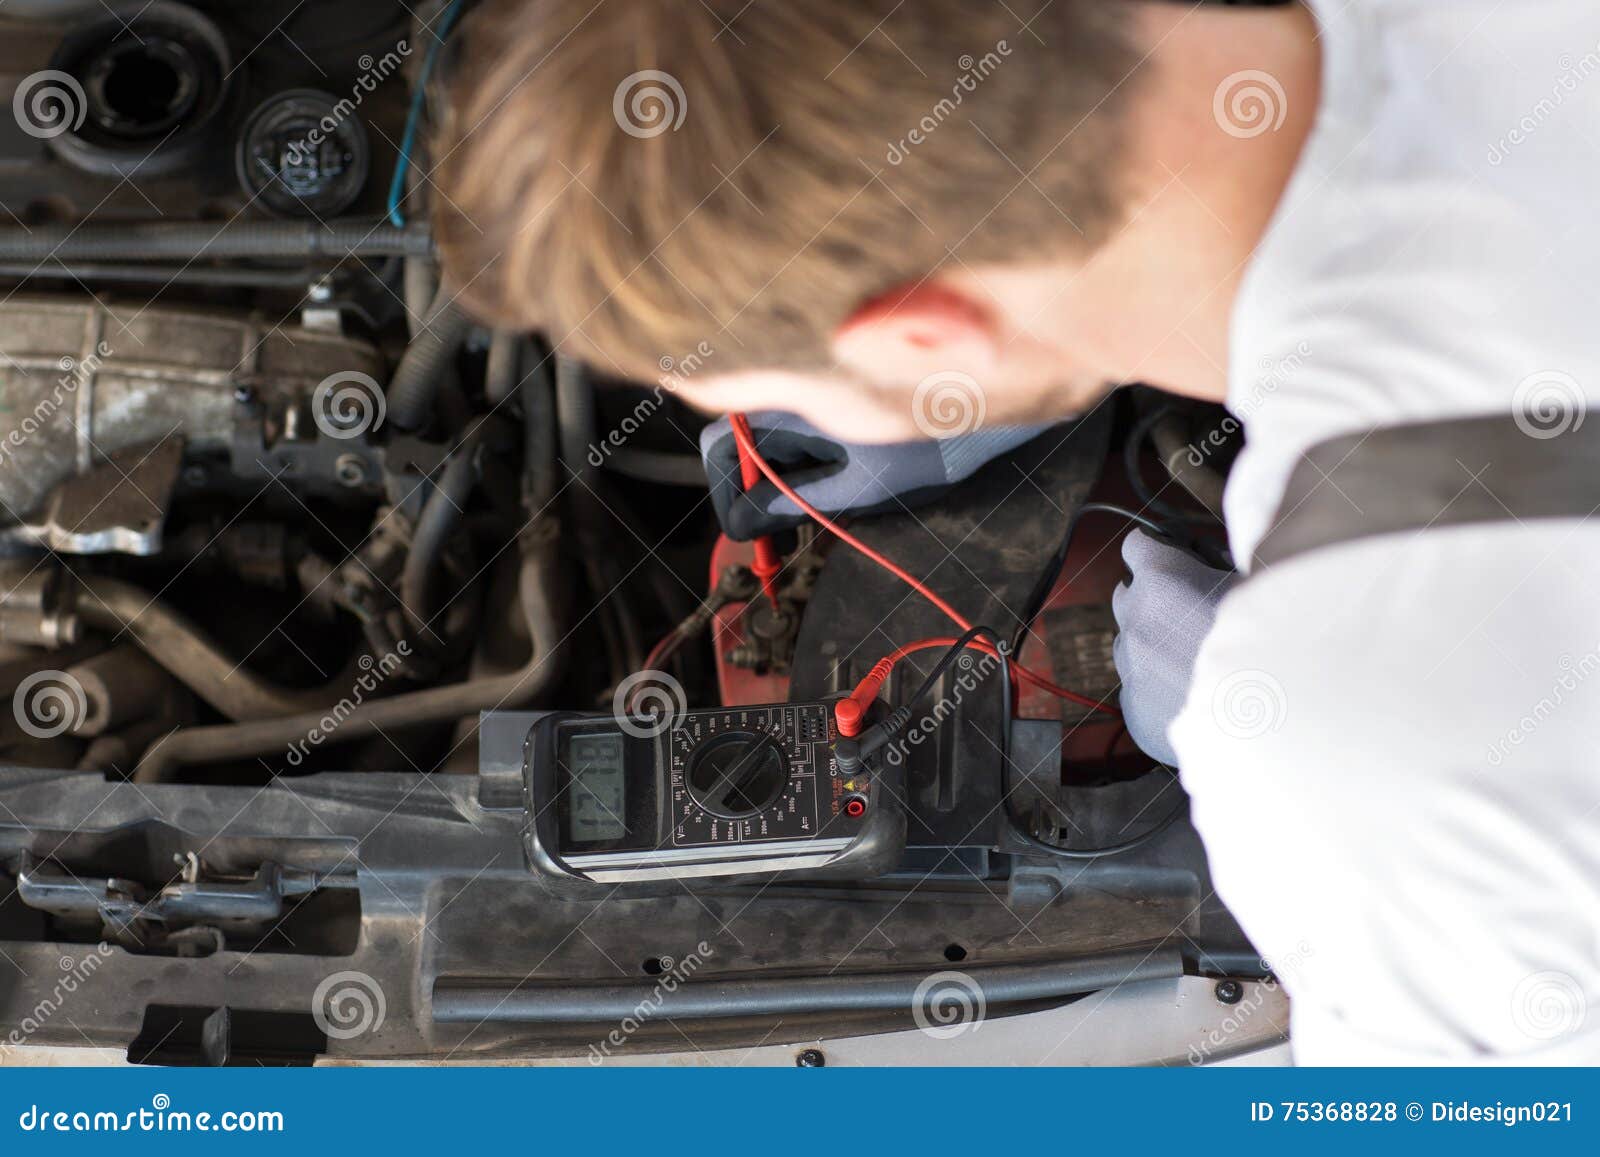 mechanic checks electronics accumulator